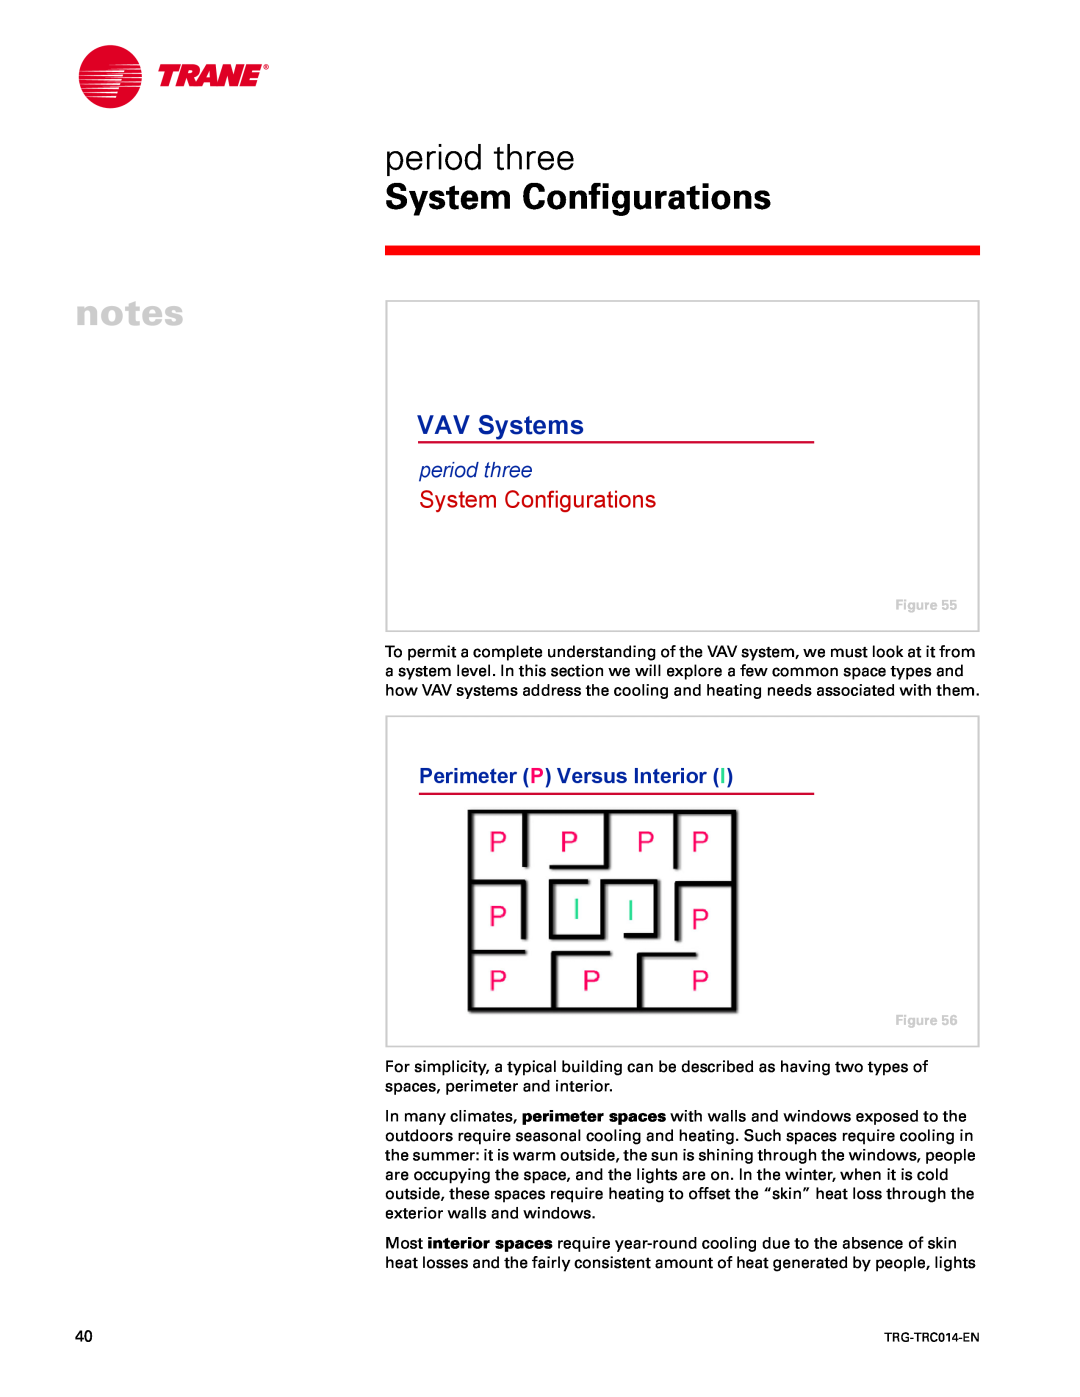 Trane TRG-TRC014-EN manual period three, System Configurations, Perimeter P Versus Interior, VAV Systems 